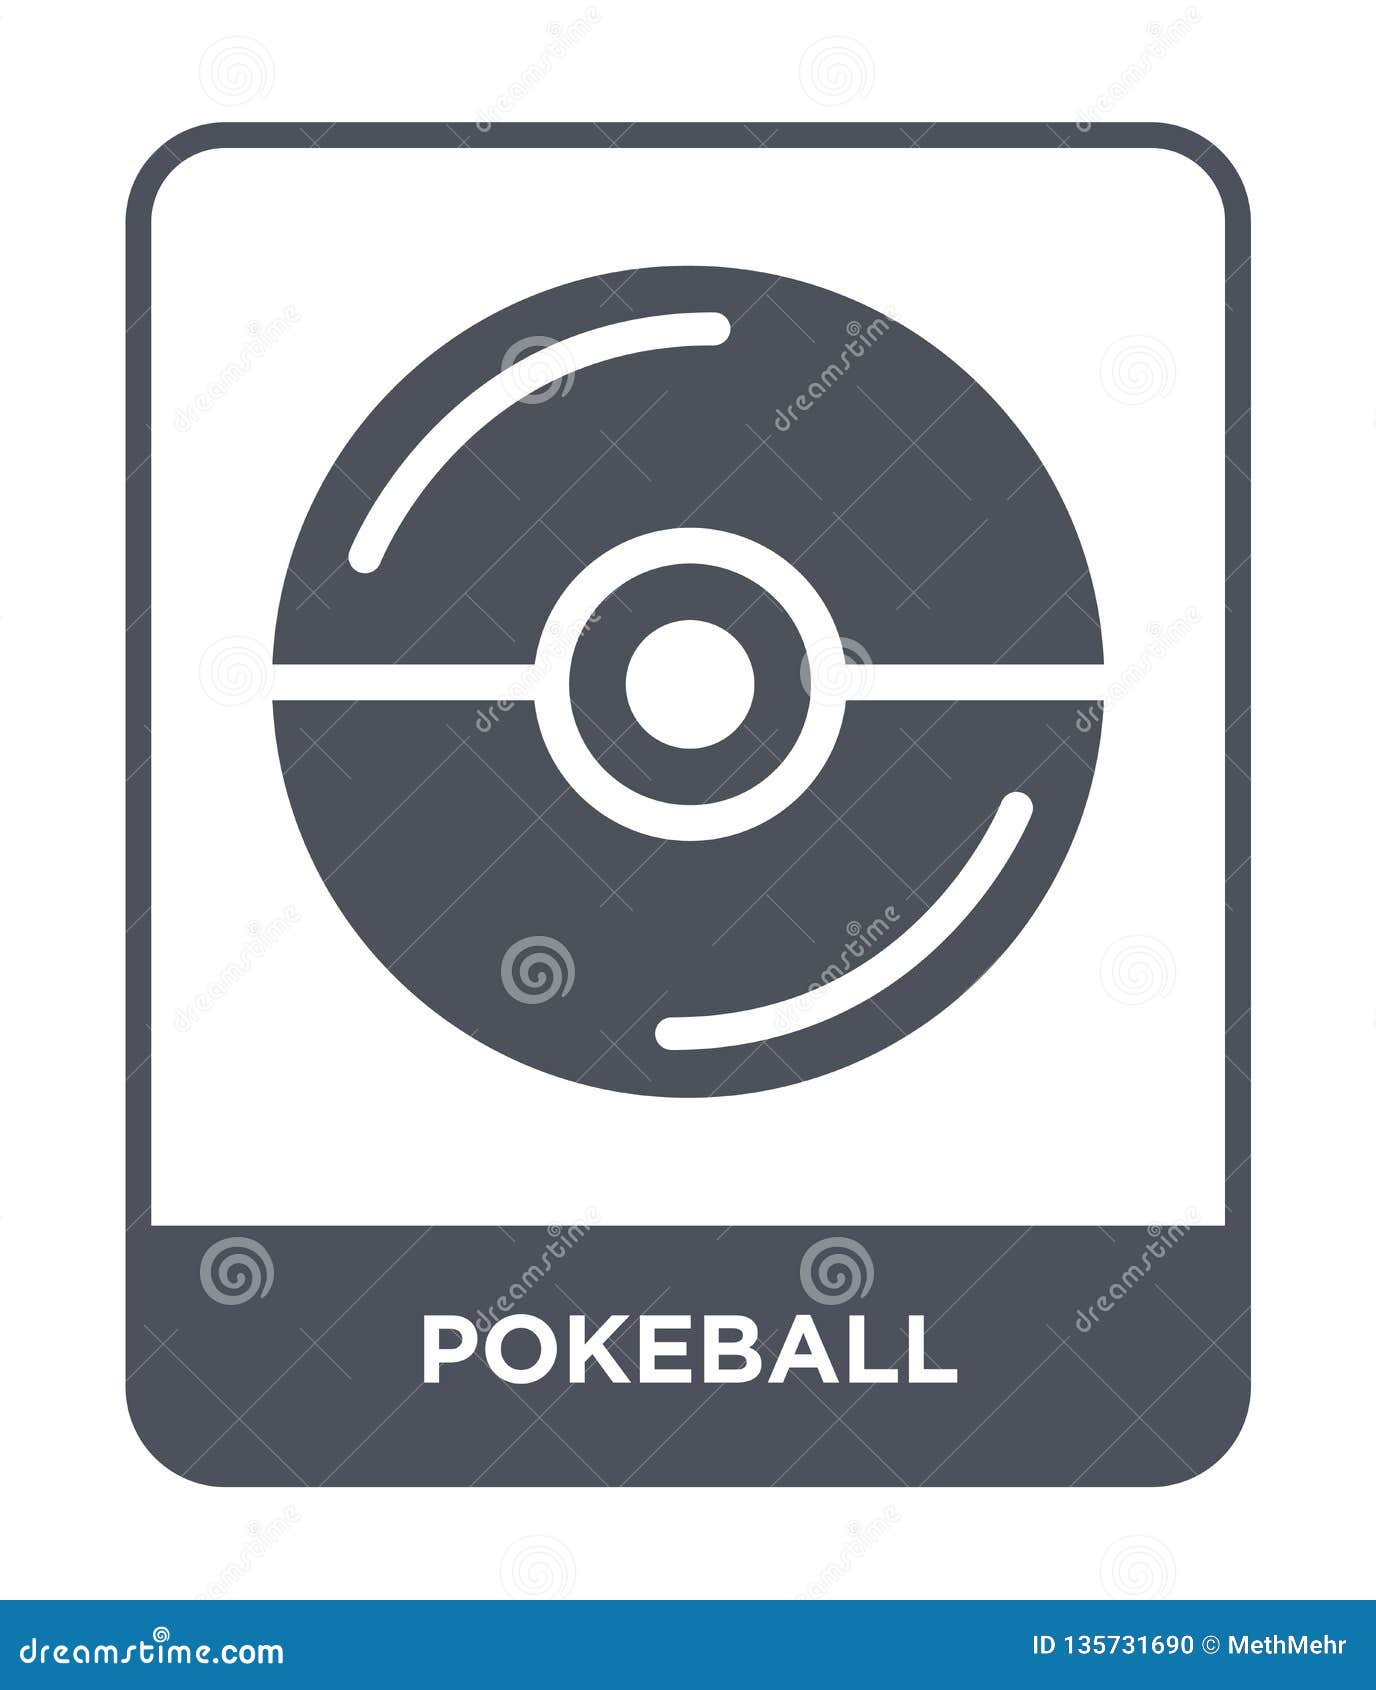 Pokeball Icons by Samantha de Joya on Dribbble